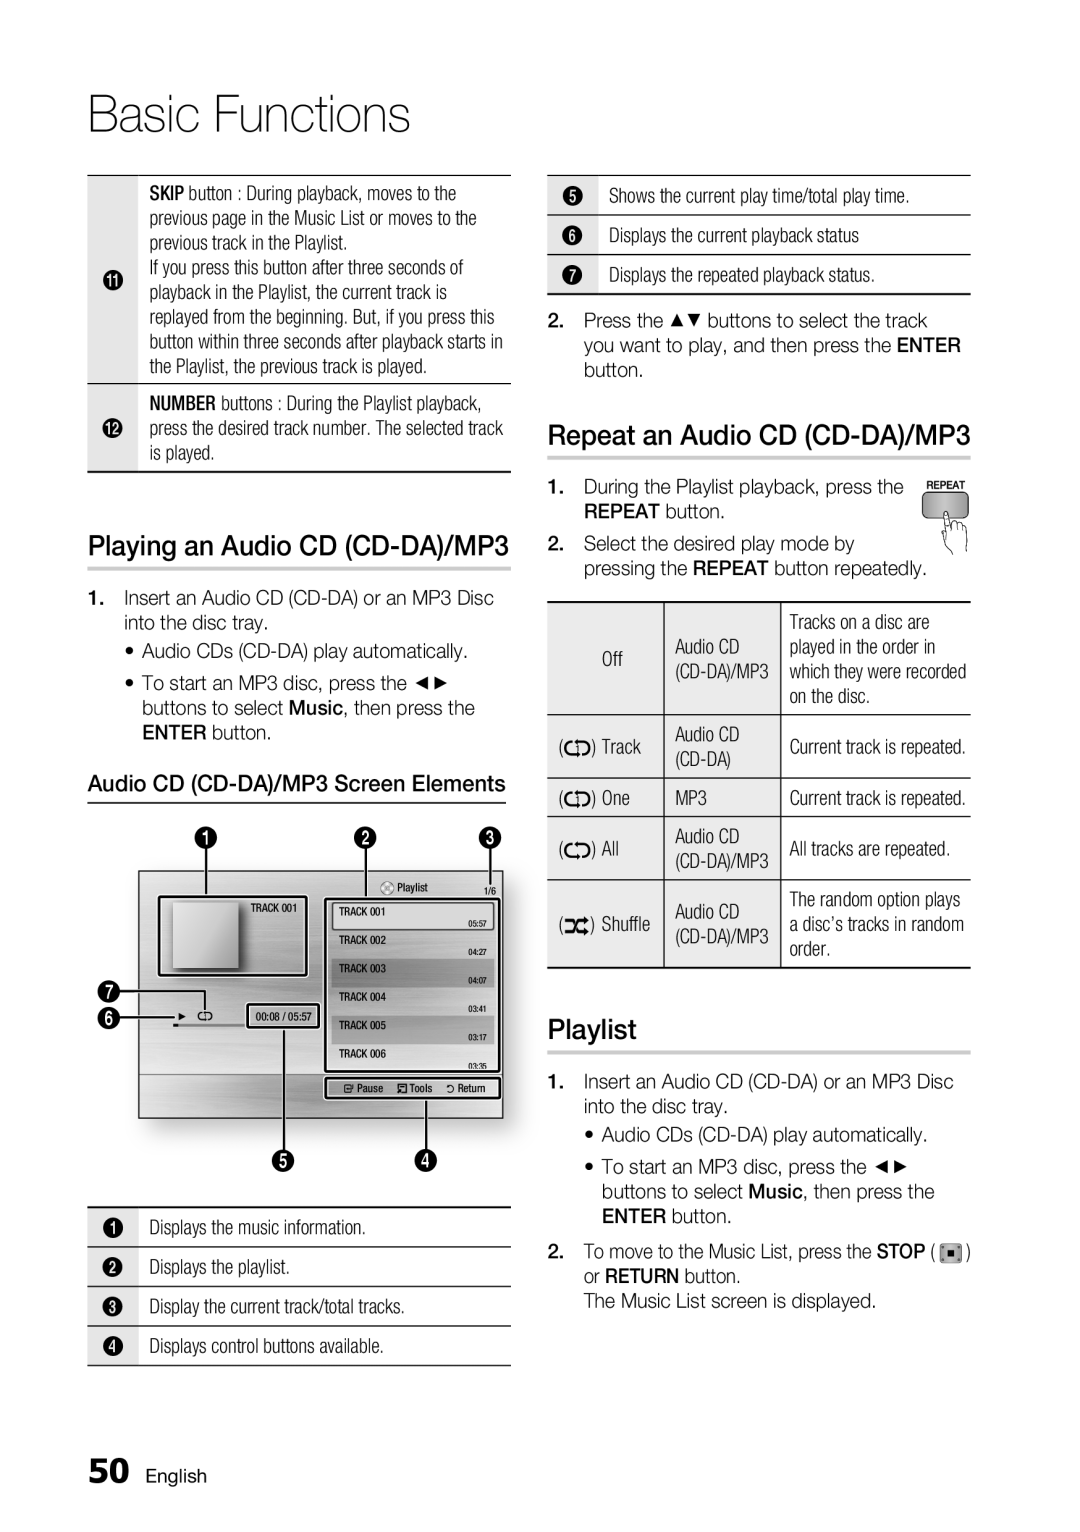 Samsung BD-C7500/XEN, BD-C7500/XEF Playing an Audio CD CD-DA/MP3, Repeat an Audio CD CD-DA/MP3, Playlist, Basic Functions 